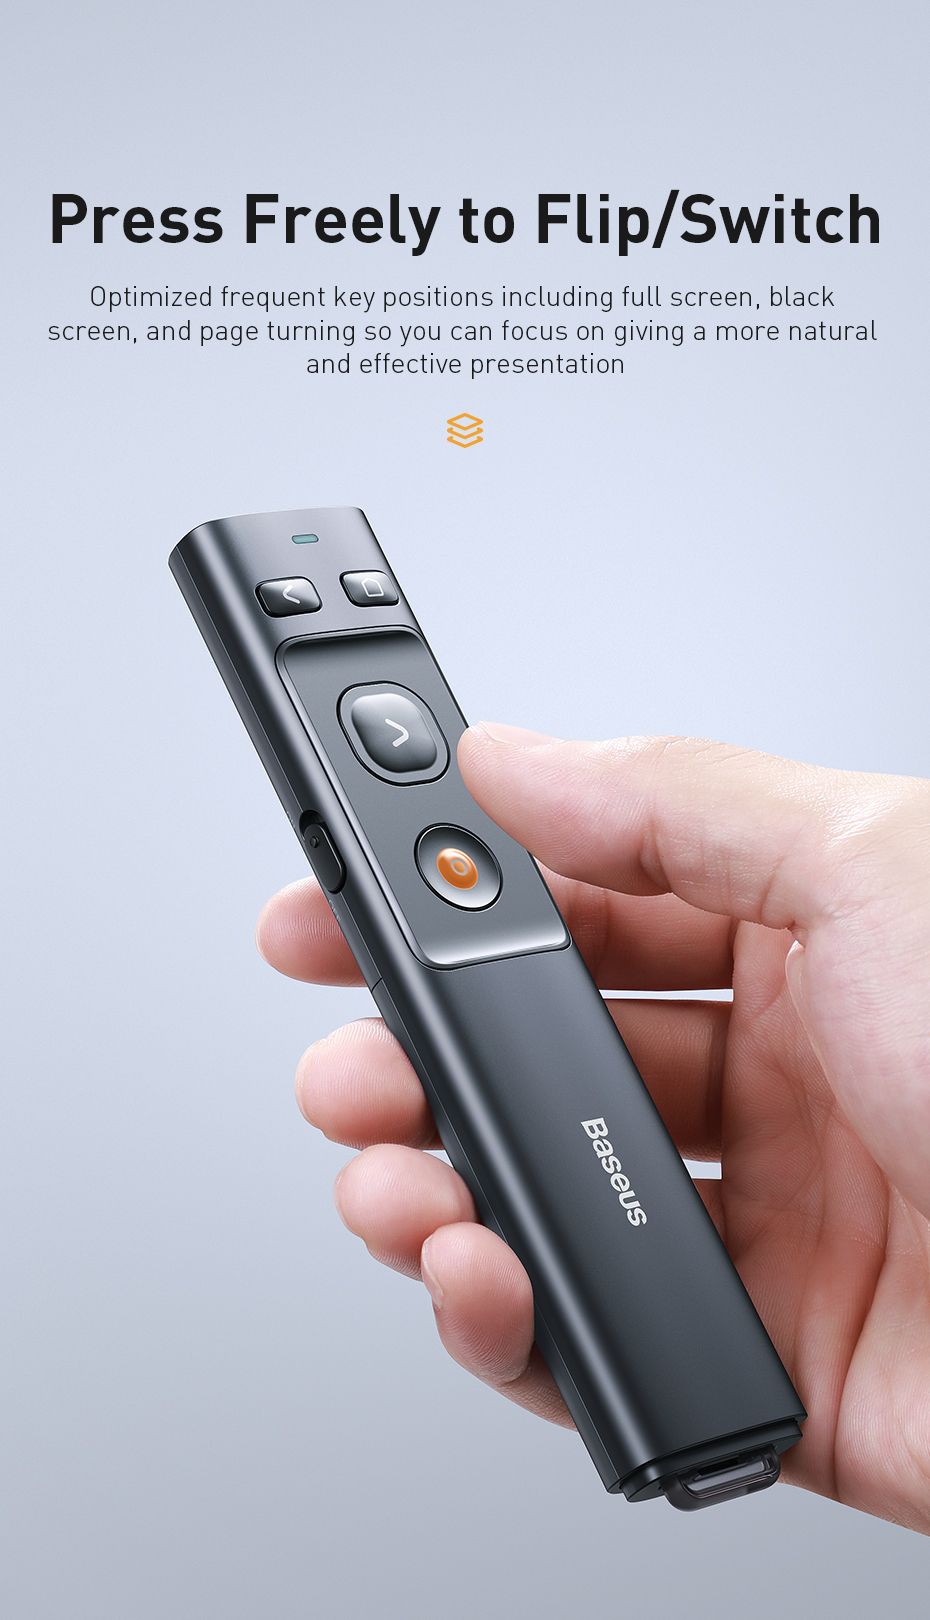 Baseus-24GHz-Wireless-Presenter-Red-Laser-Pen-USB-Control-Pen-Remote-Controller-For-Mac-Win-10-8-7-X-1671914